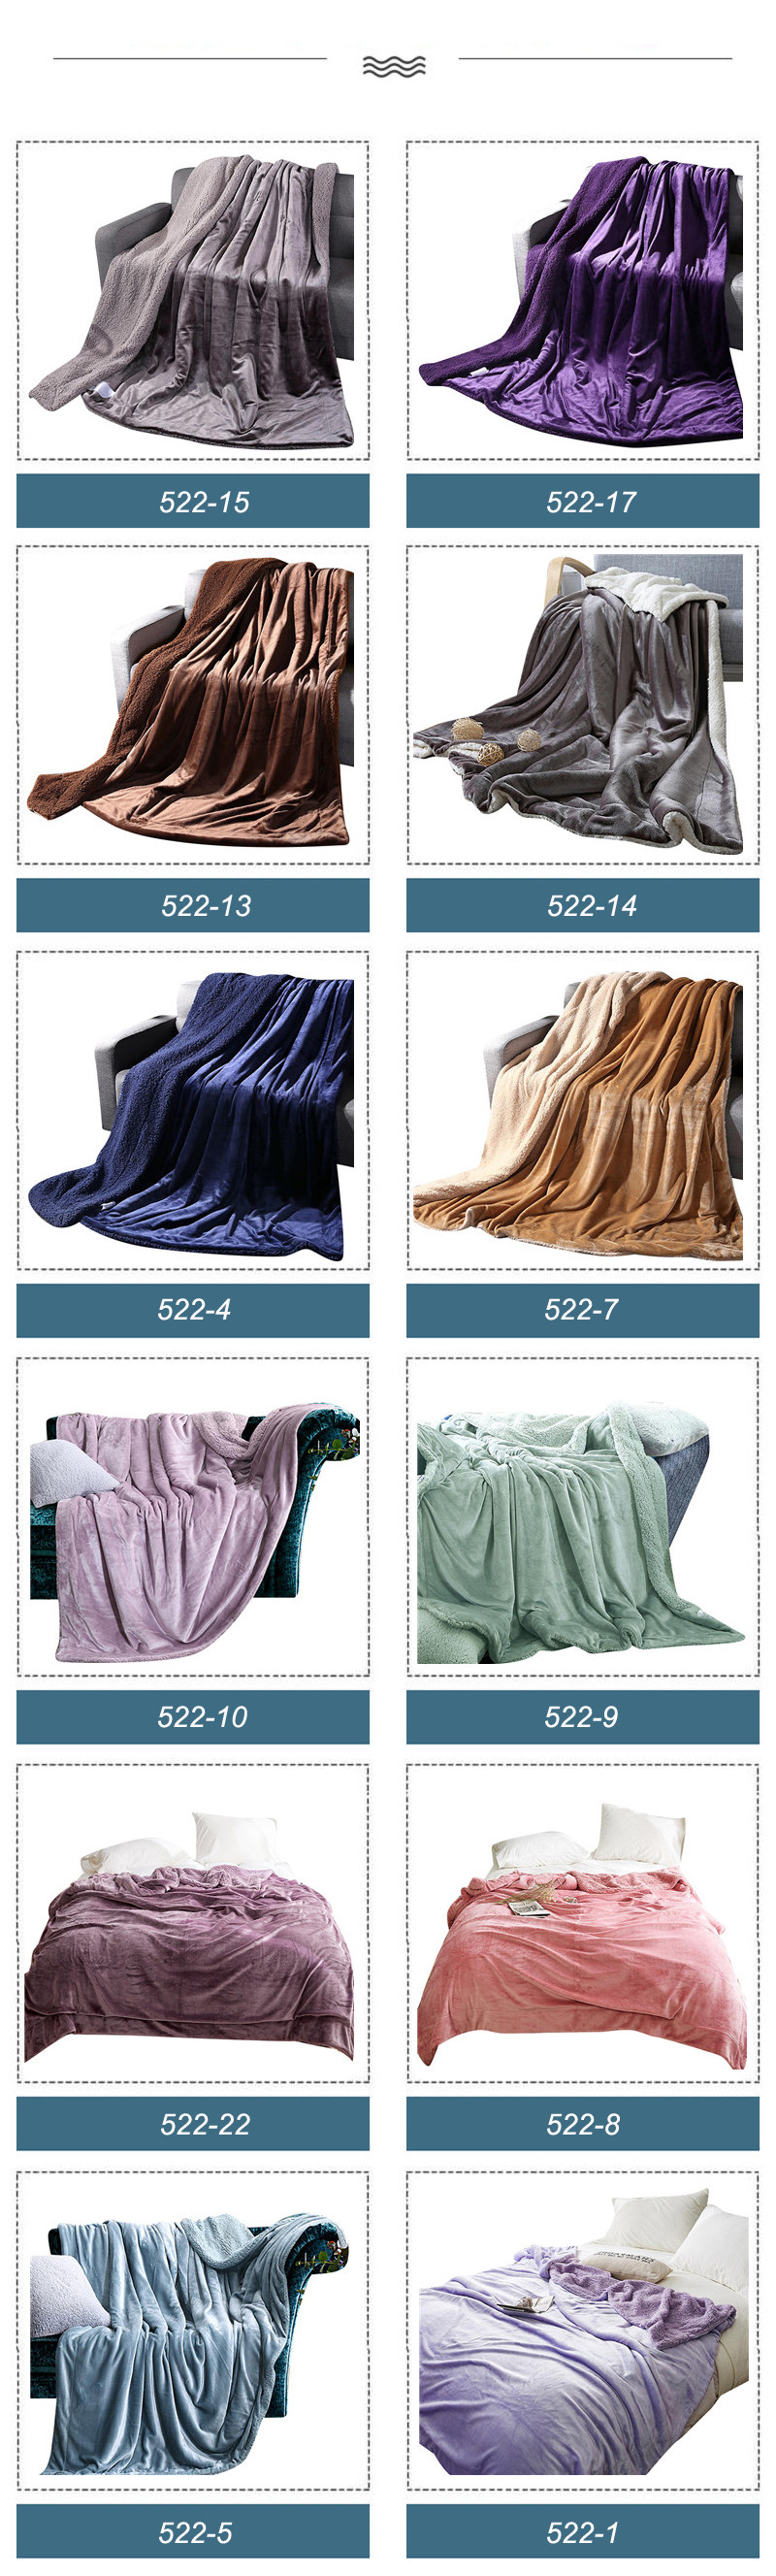 Throw Blanket For Queen Size Modern Design